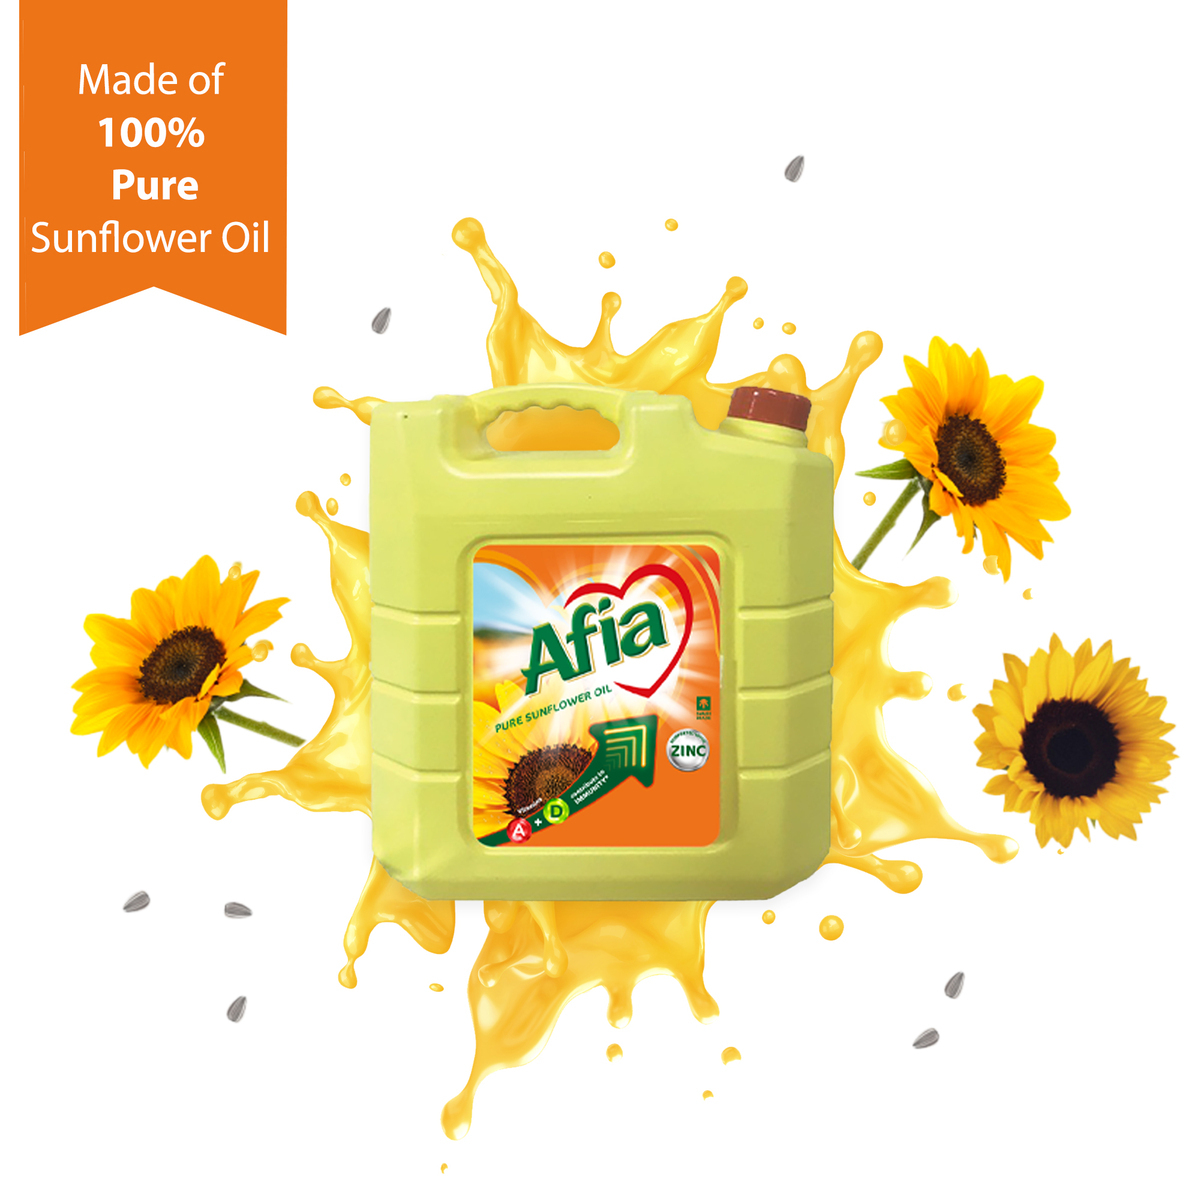 Afia Sunflower Oil Value Pack 9 Litres